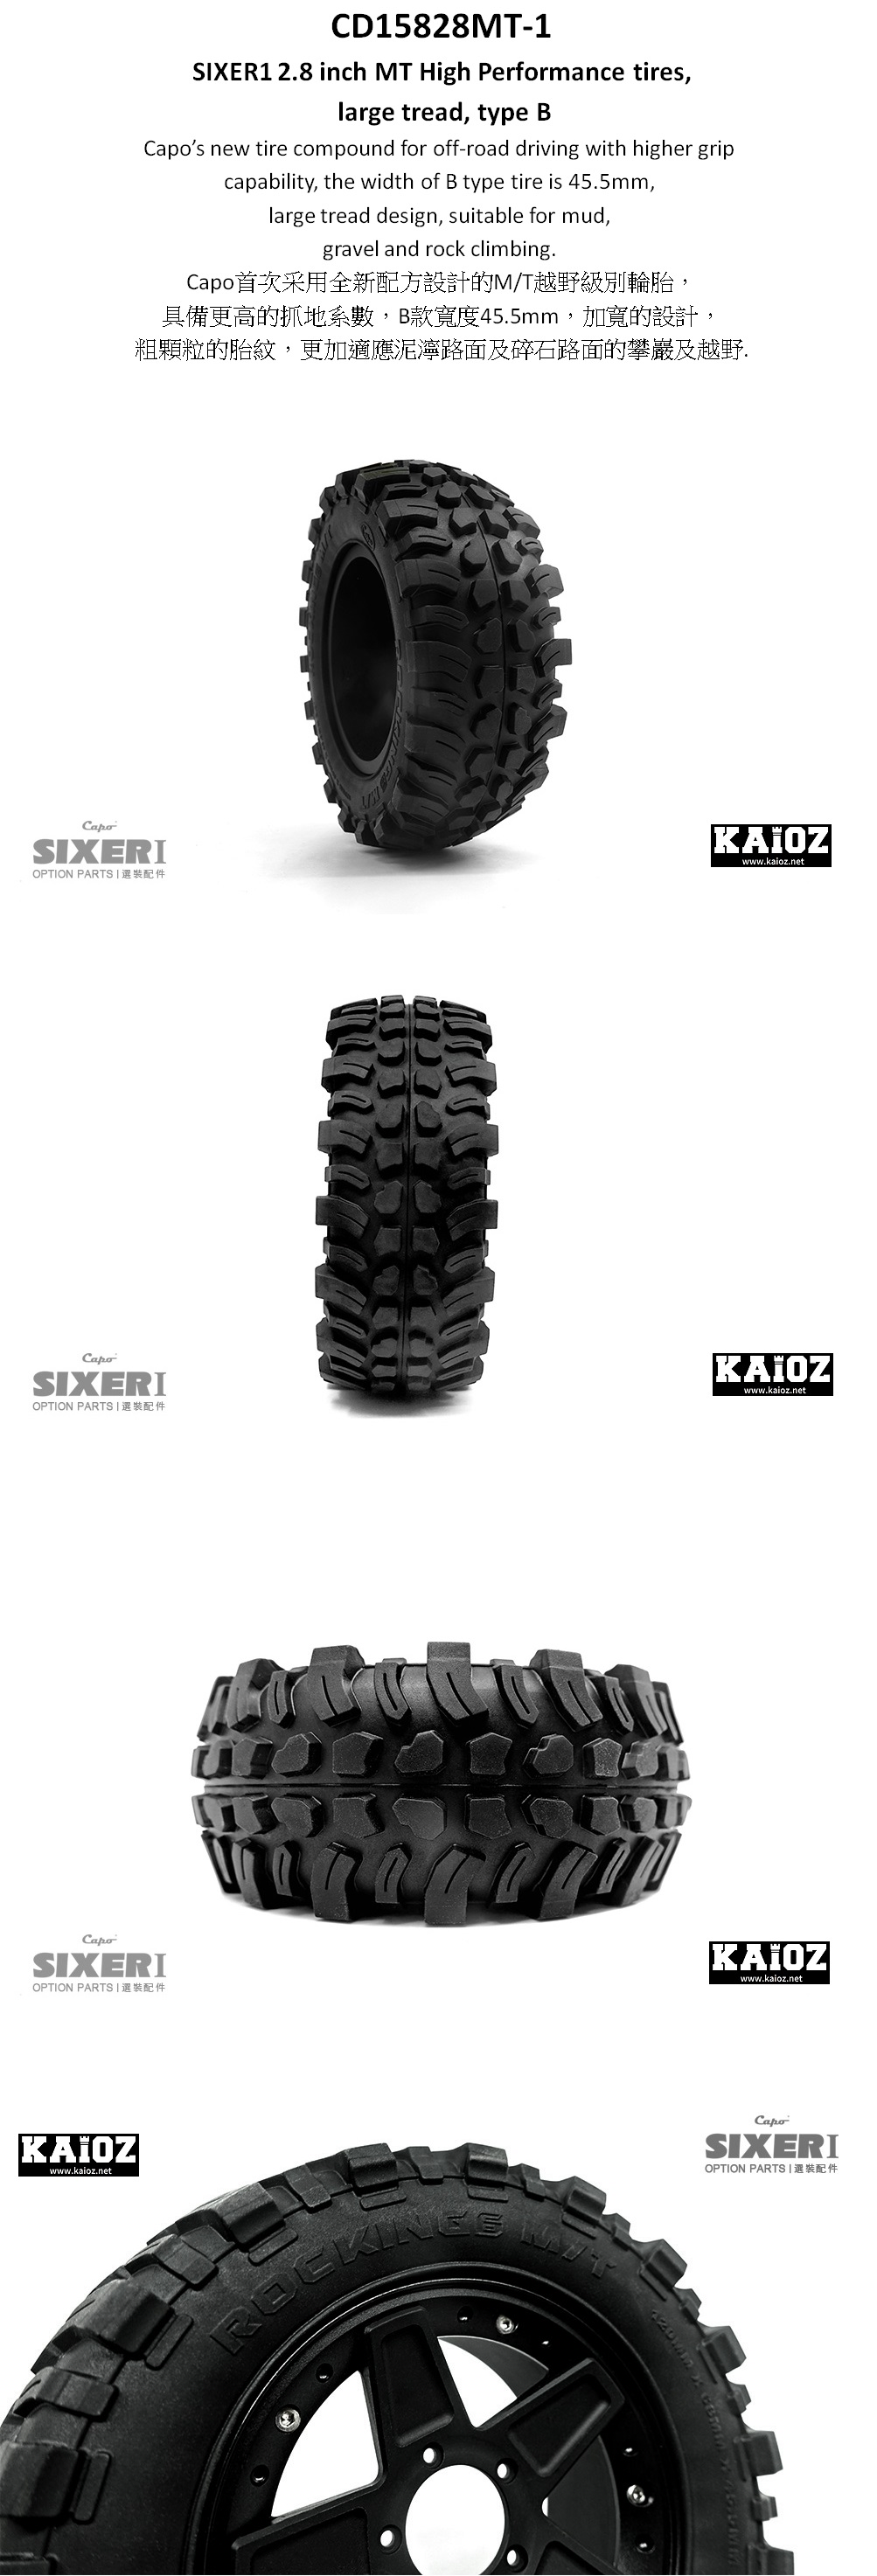 27_CD15828MT-1_SIXER1 2.8 inch MT High Performance tires, large tread, type B.jpg